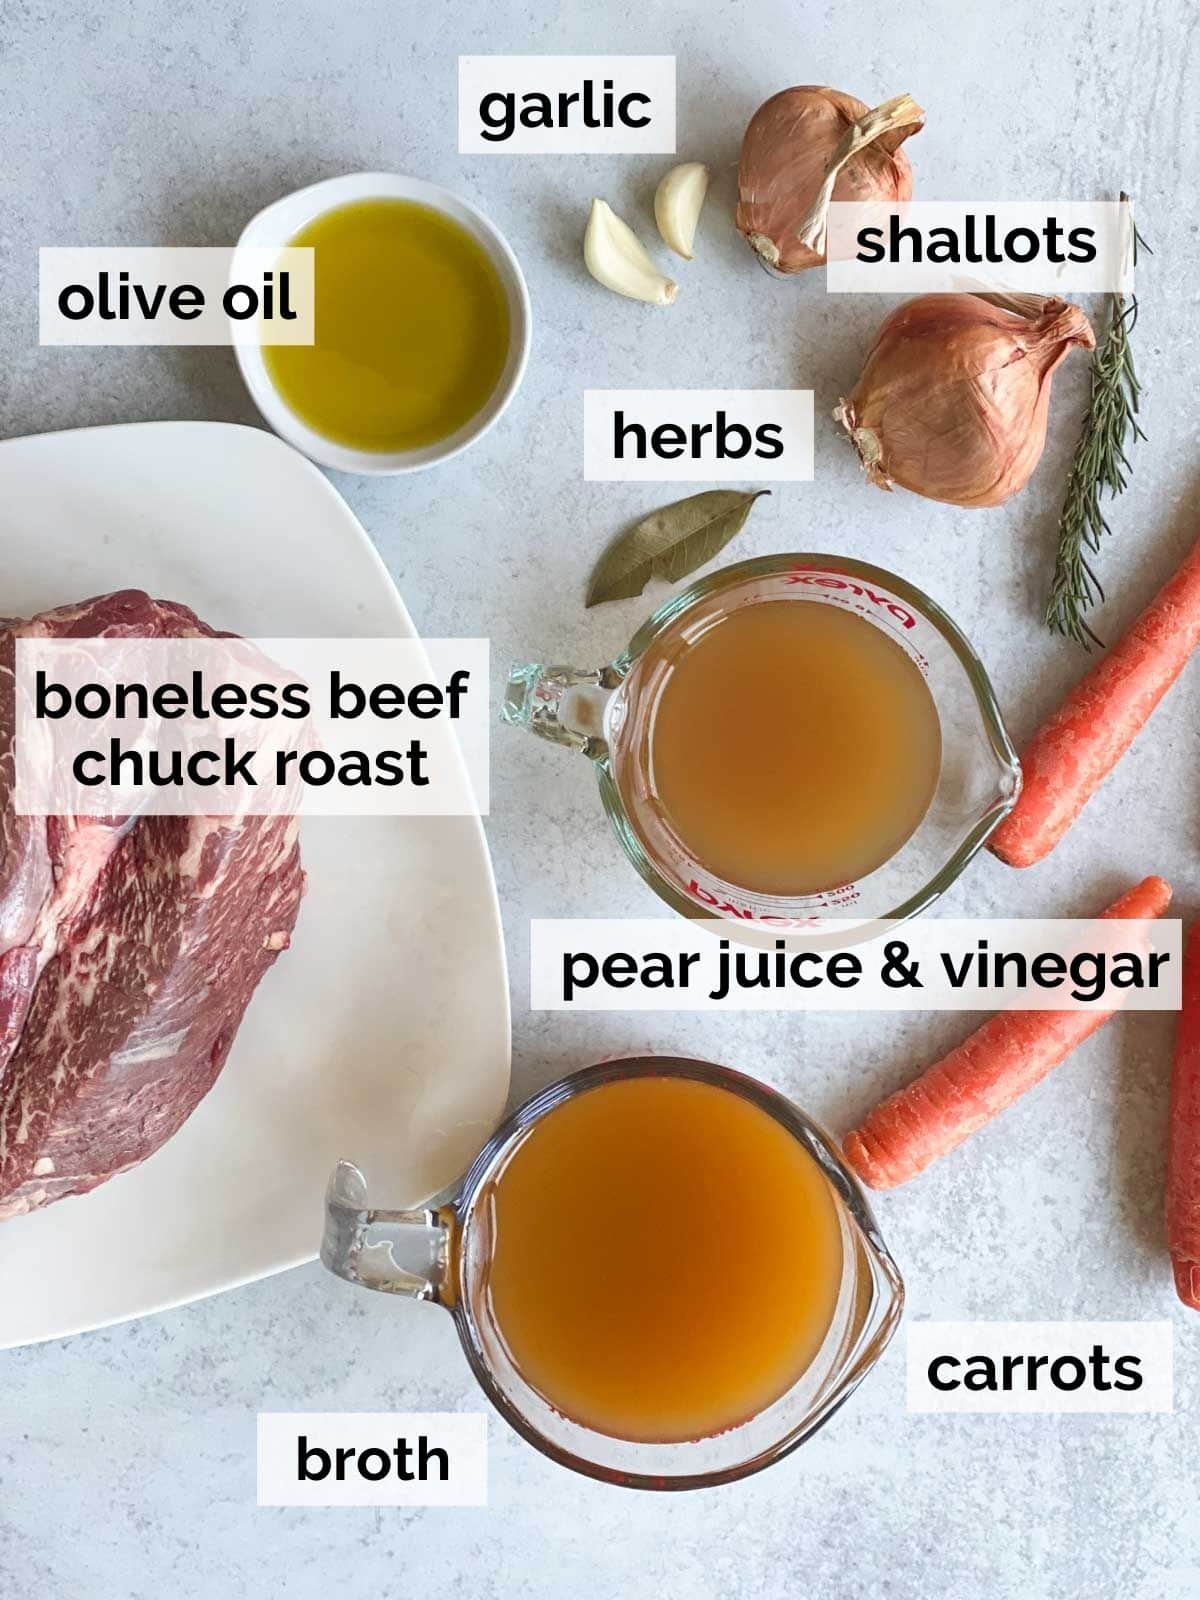 Chuck roast, broth, carrots, and herbs on a table.